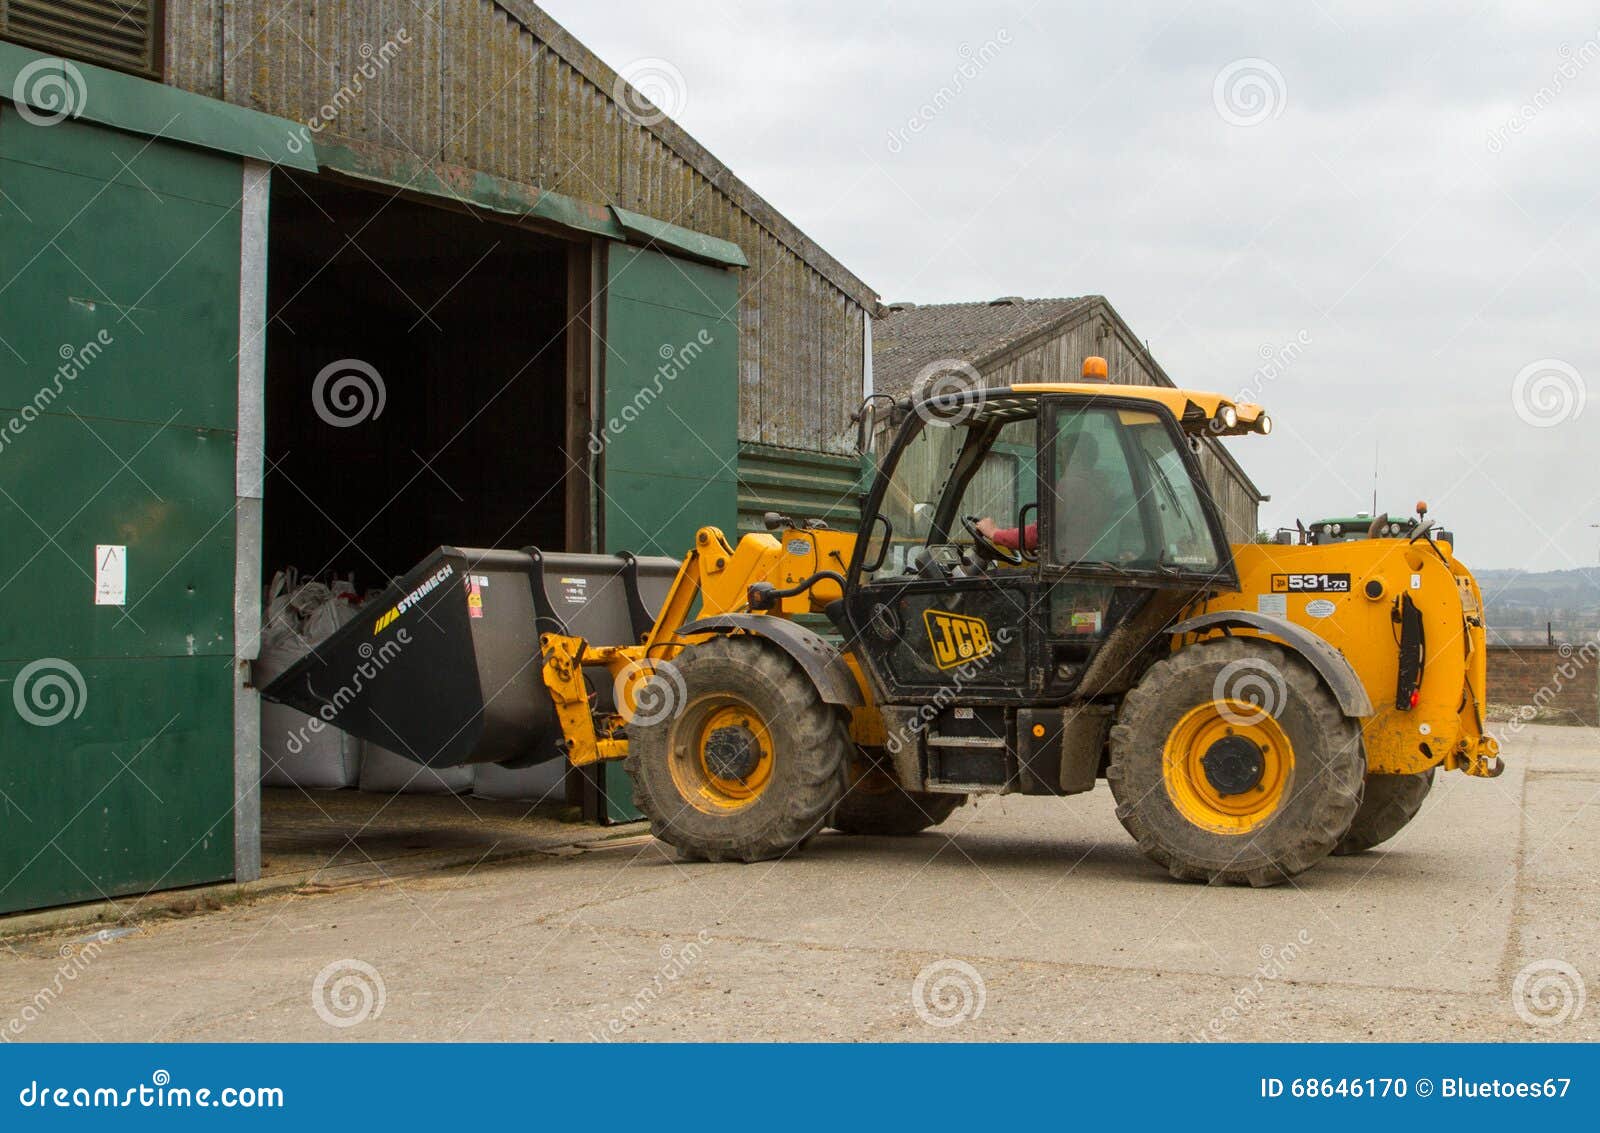 construction-digger-loader-farm-yard-barn-yellow-jcb-bulldozer-bags-crops-68646170.jpg